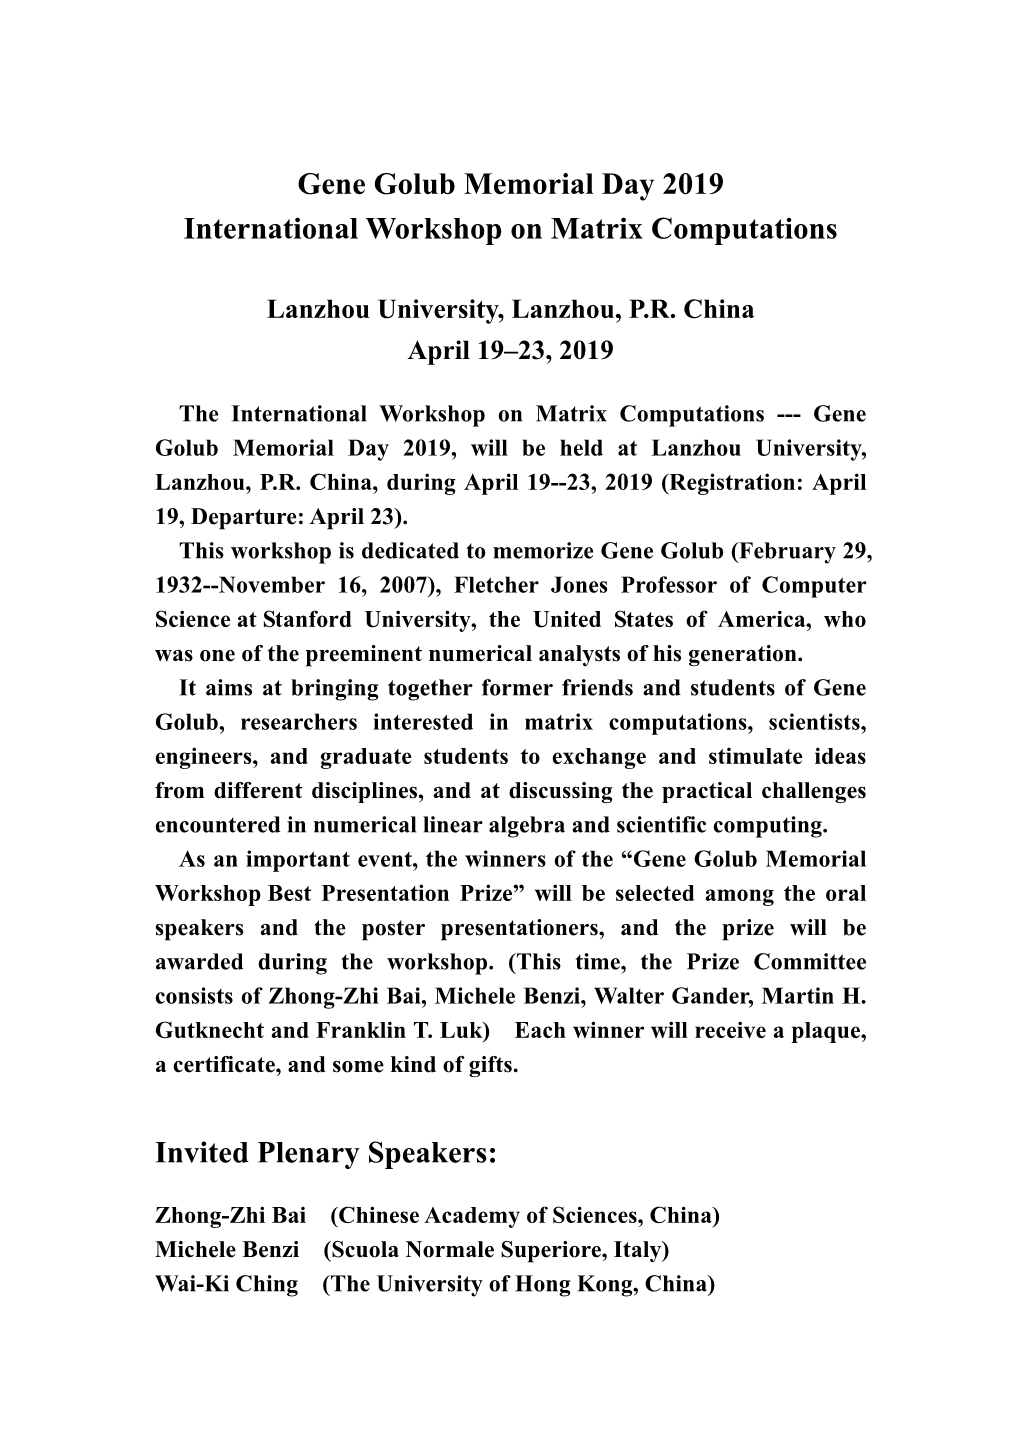 Gene Golub Memorial Day 2019 International Workshop on Matrix Computations